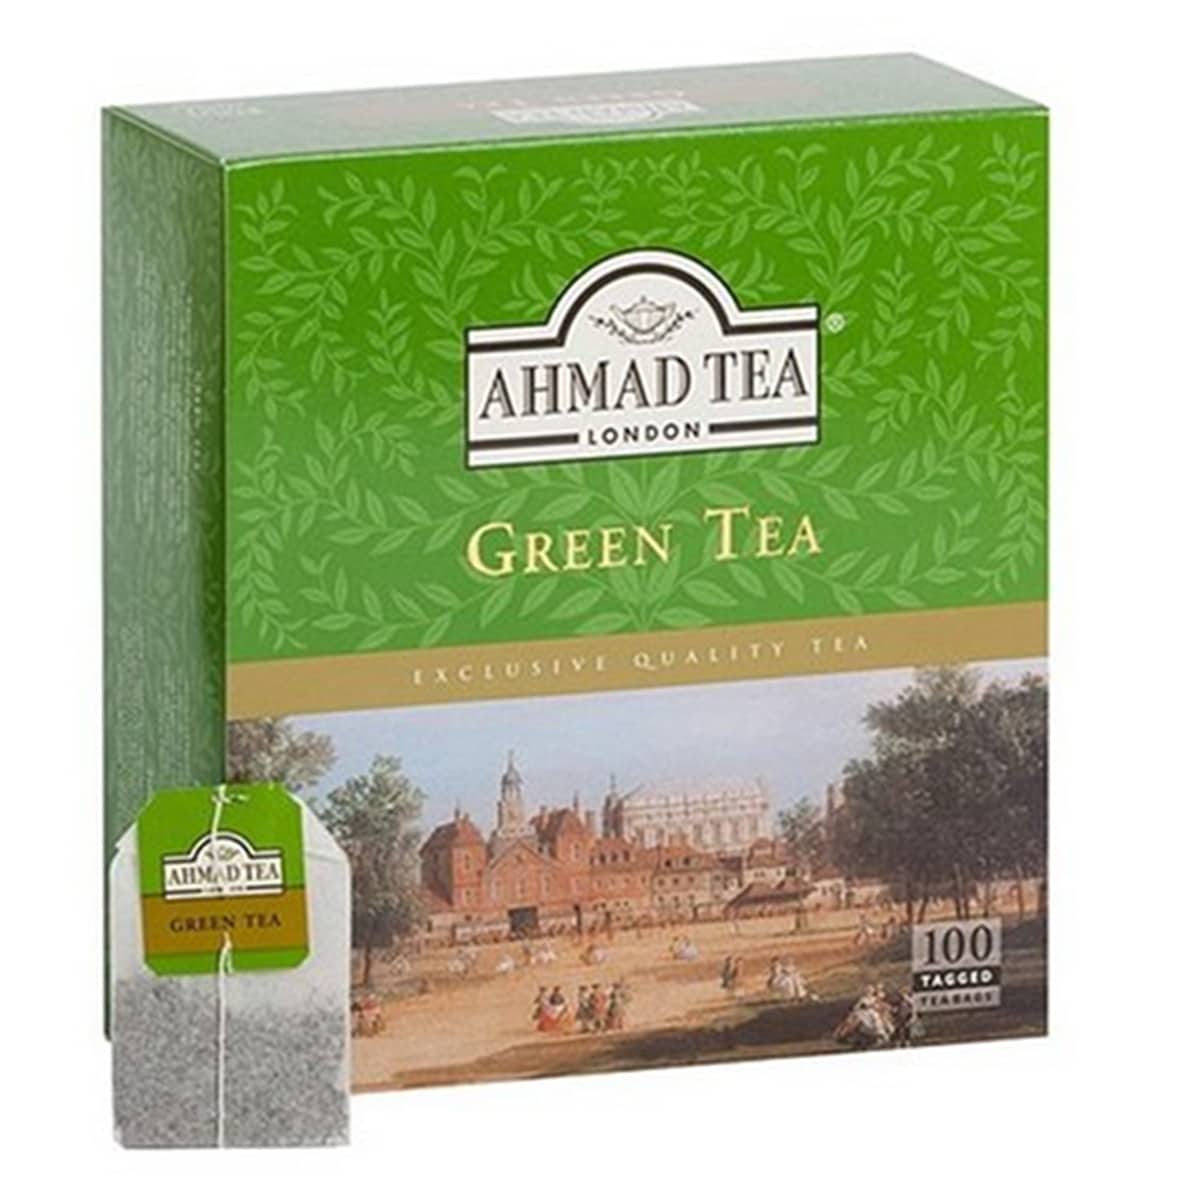 Buy Ahmad Tea London Green Tea (100 Tagged Teabags) - 500 gm